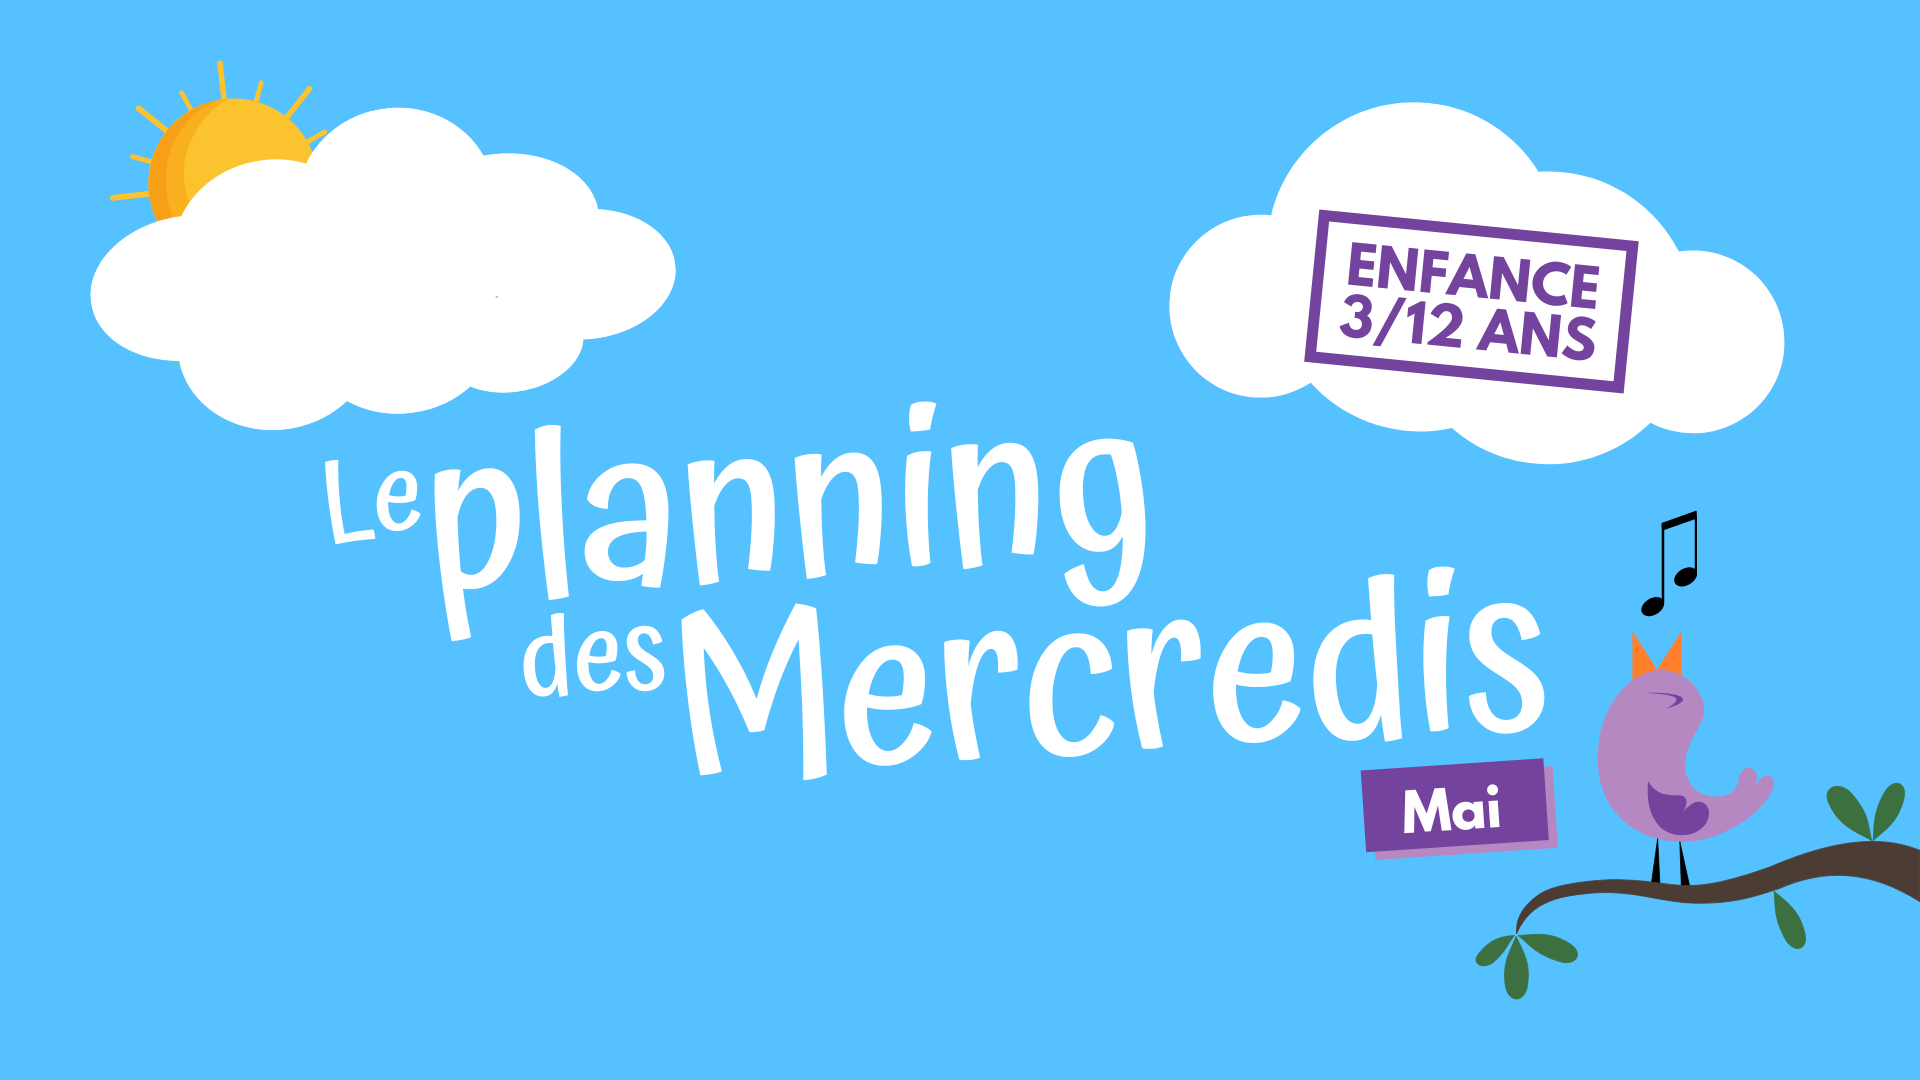 You are currently viewing Planning des mercredis (du 3 au 25 mai 2022) – Enfance (3/12 ans)